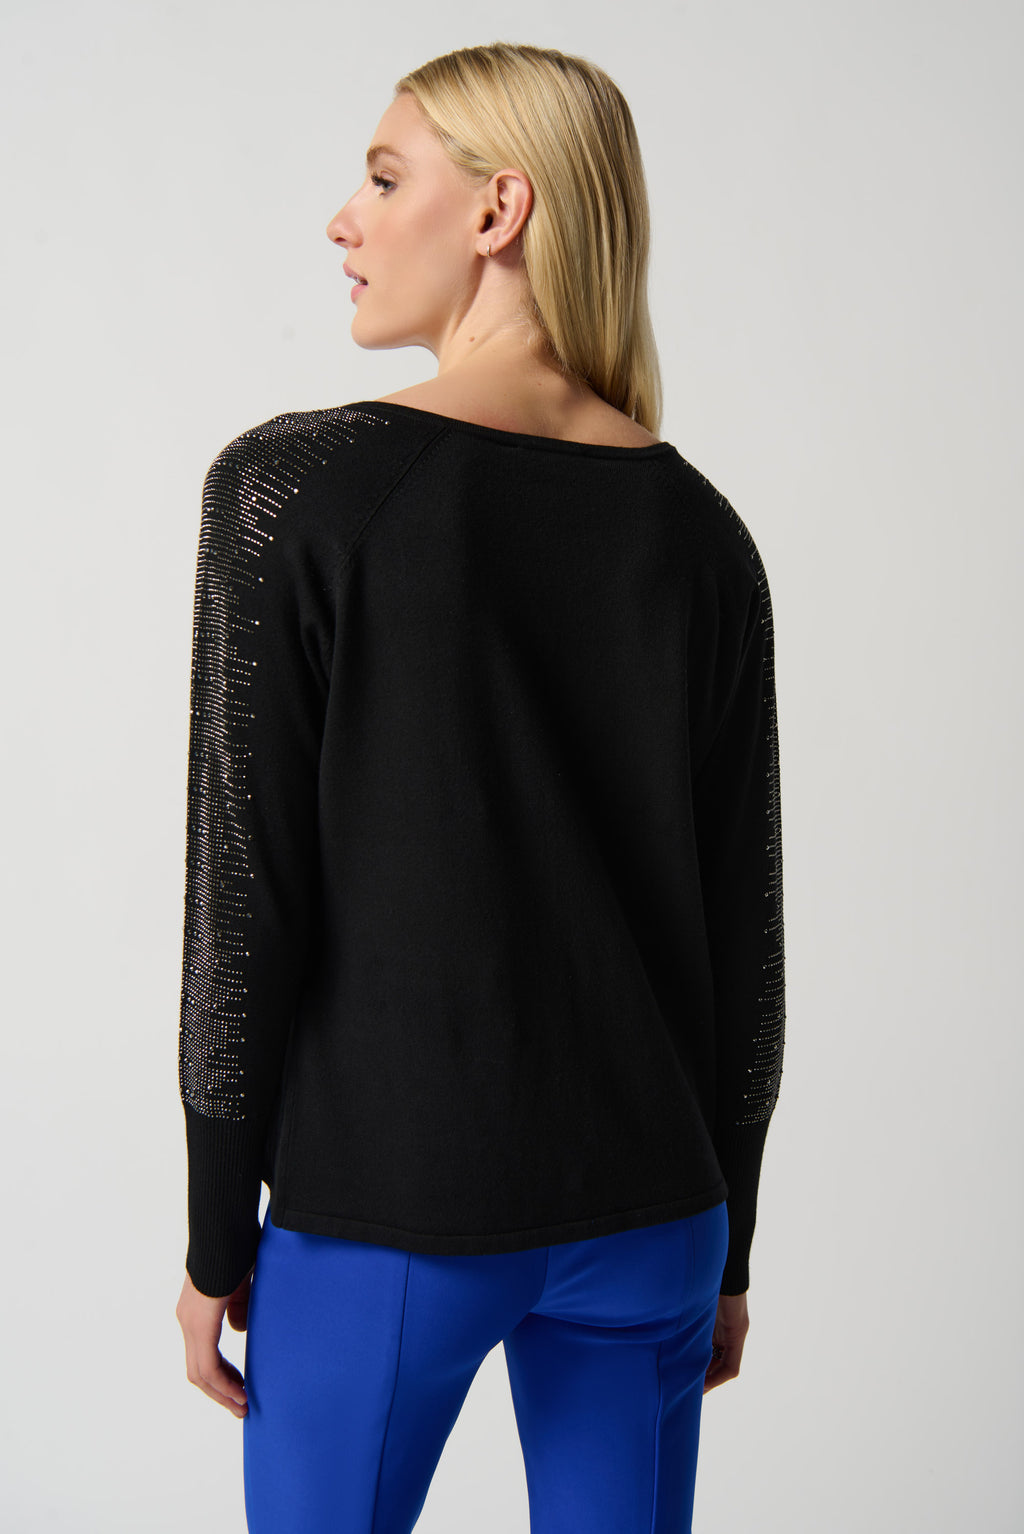 Joseph Ribkoff Black Long Sleeve V-Neck Sweater Style 234917